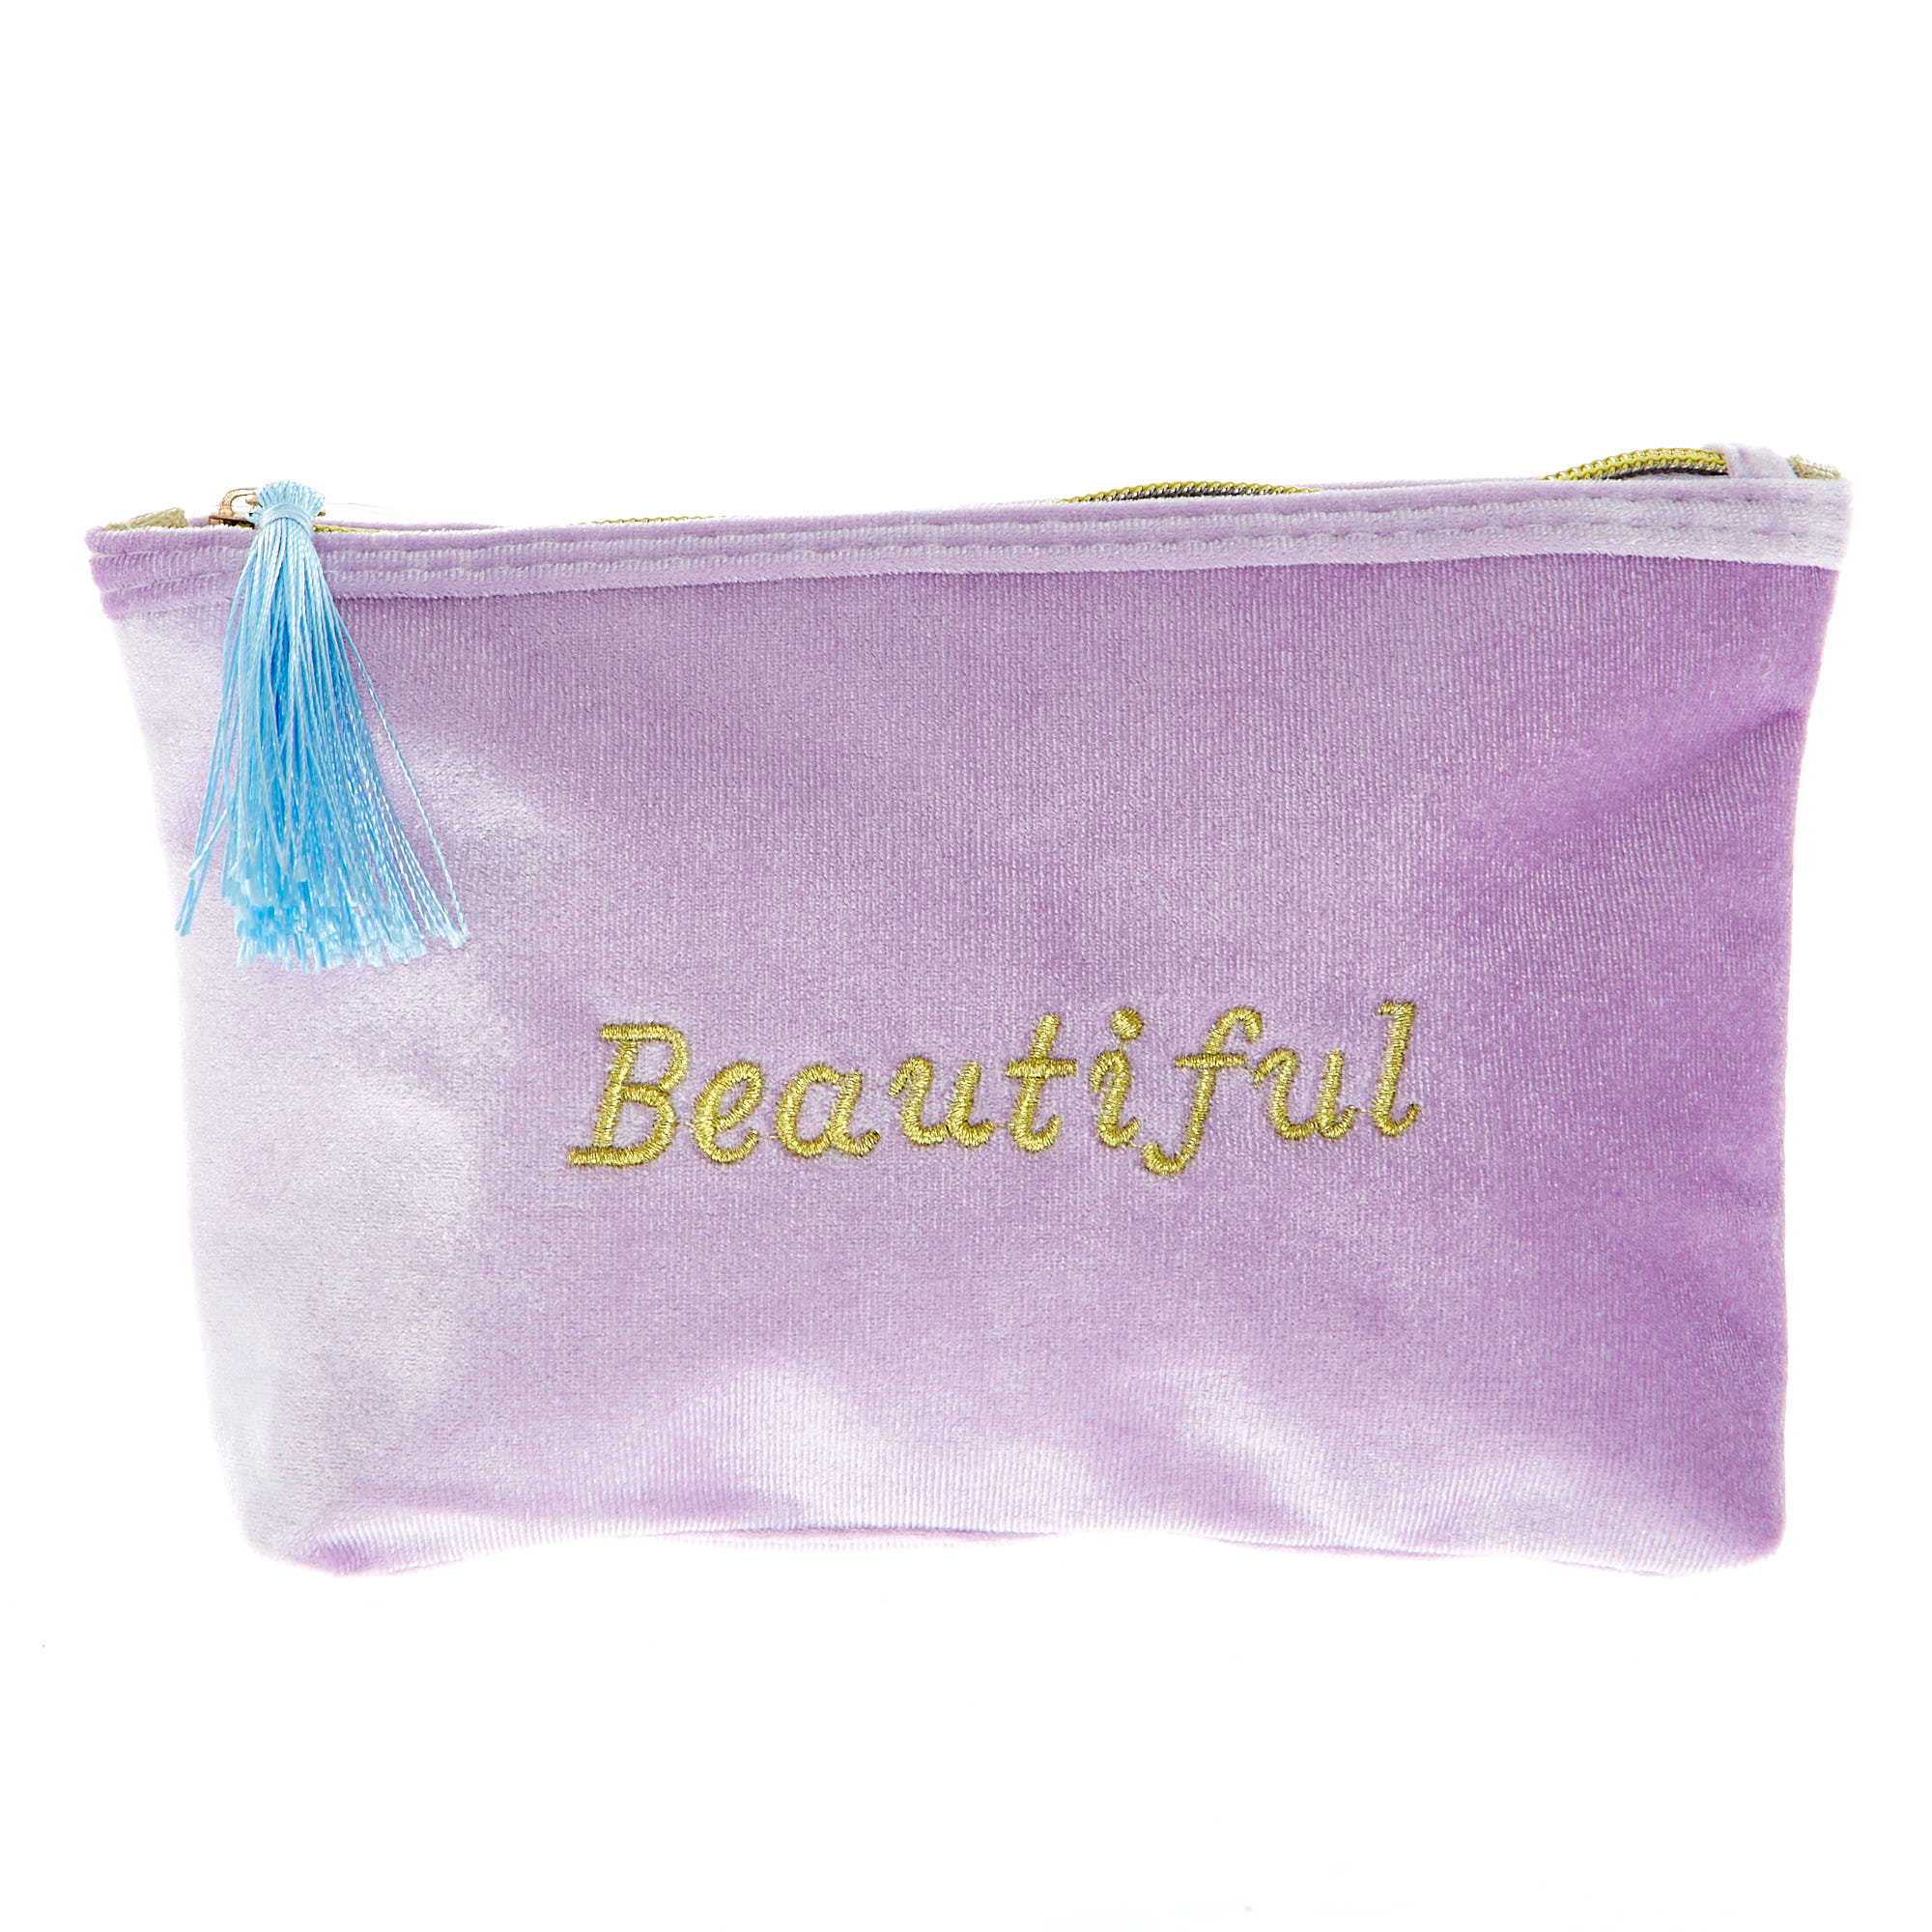 Buy Beautiful Make-Up Bag for GBP 1.00 | Card Factory UK